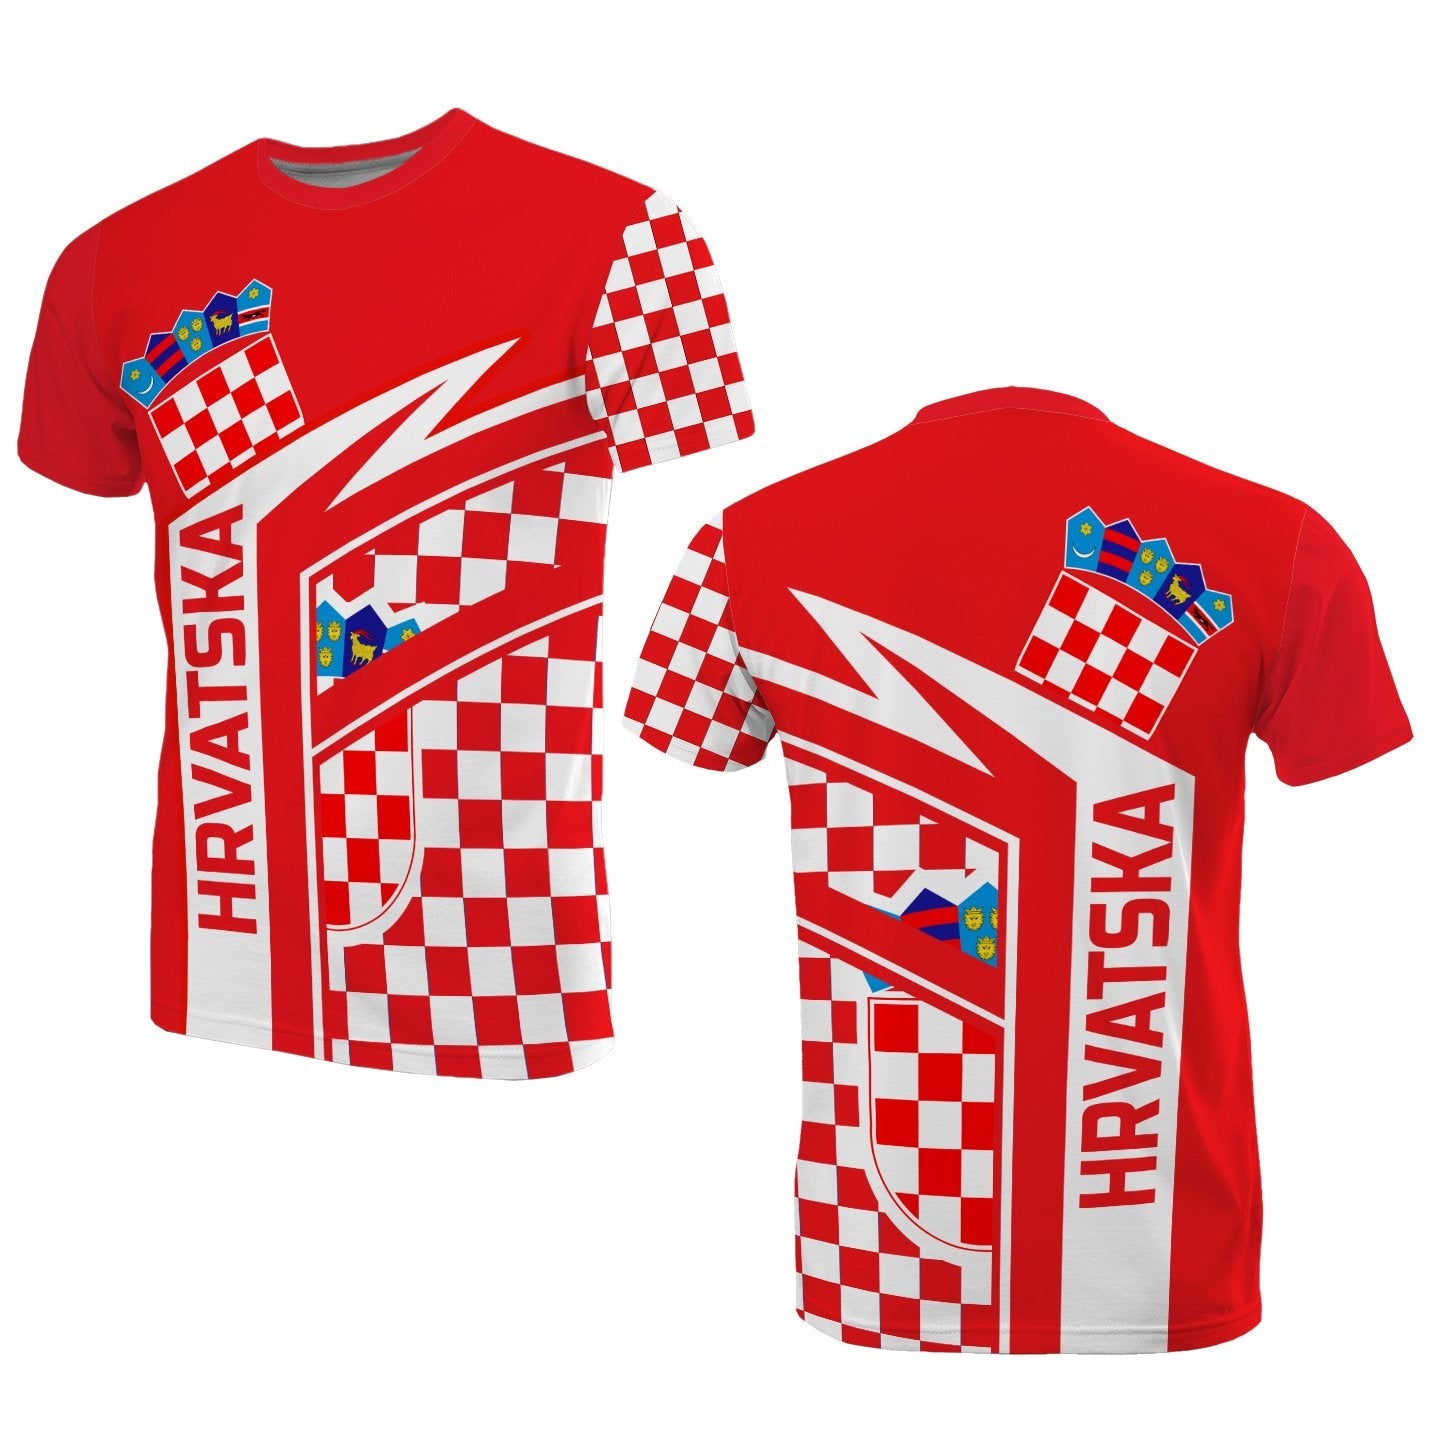 croatia-hrvatska-air-t-shirts-for-men-and-women-red